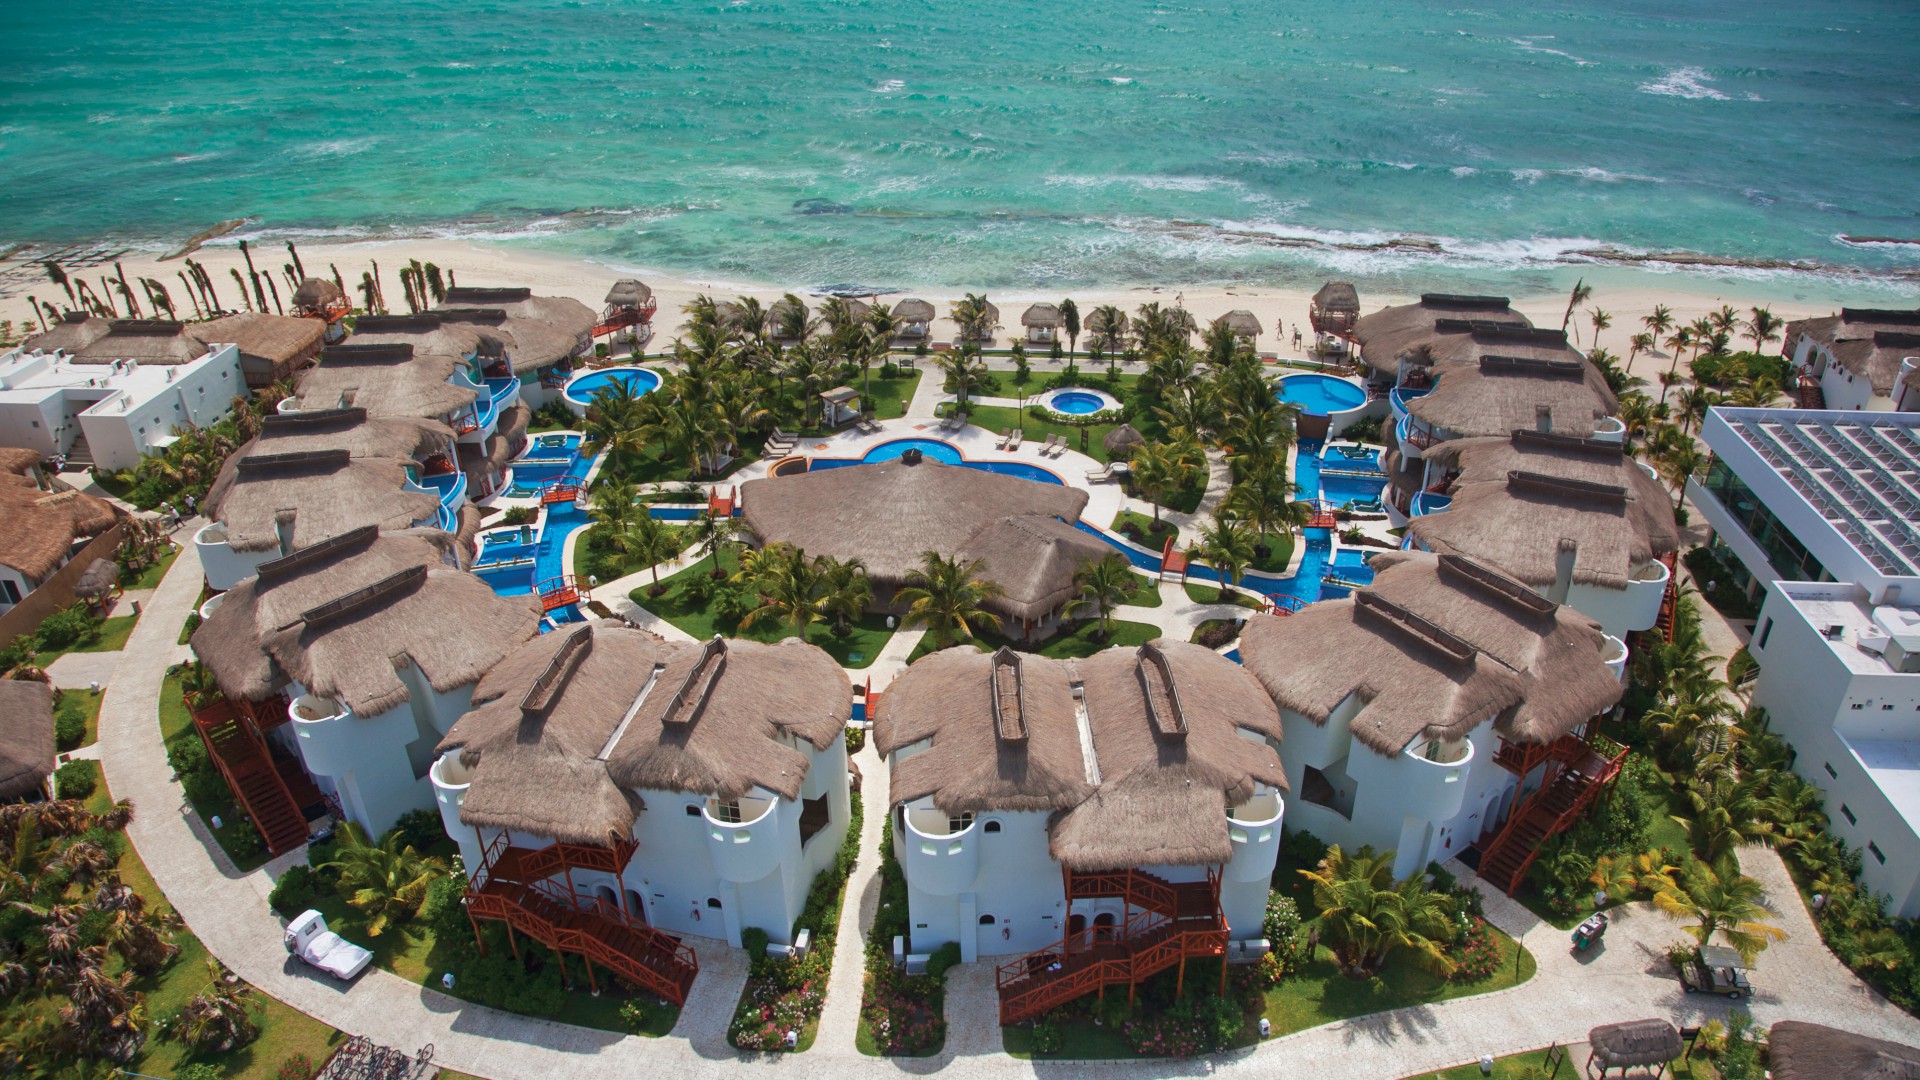 El Dorado Seaside Suites, Mexico, Best Beaches in the World, tourism, travel, resort, vacation, beach (horizontal)